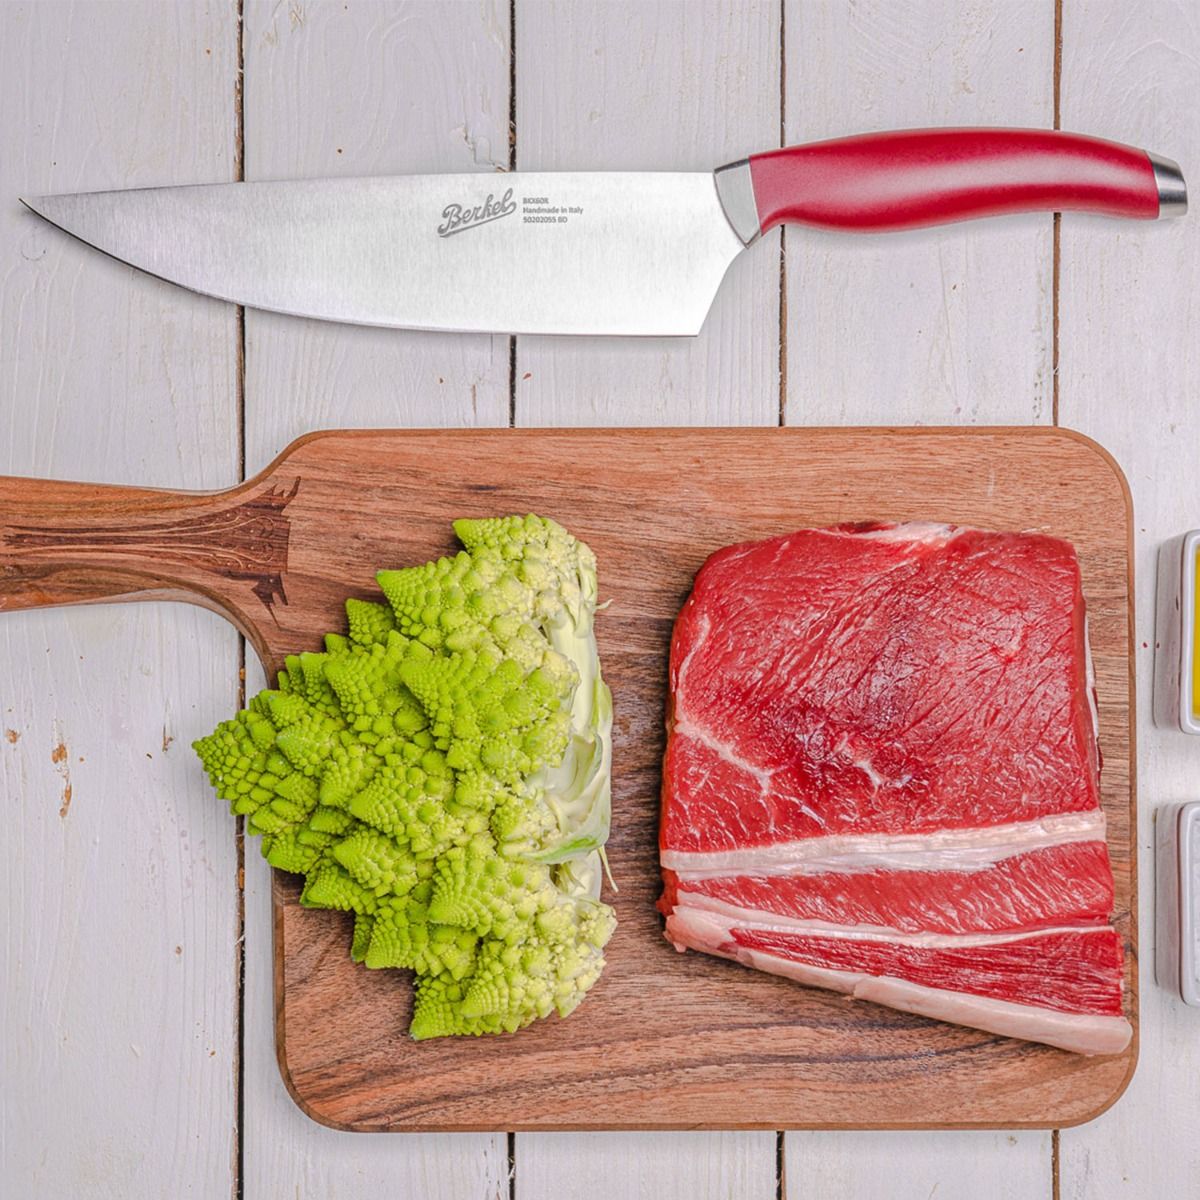 Chef's Knife 22 cm  Stainless Steel Berkel Teknica Handle Red Resin